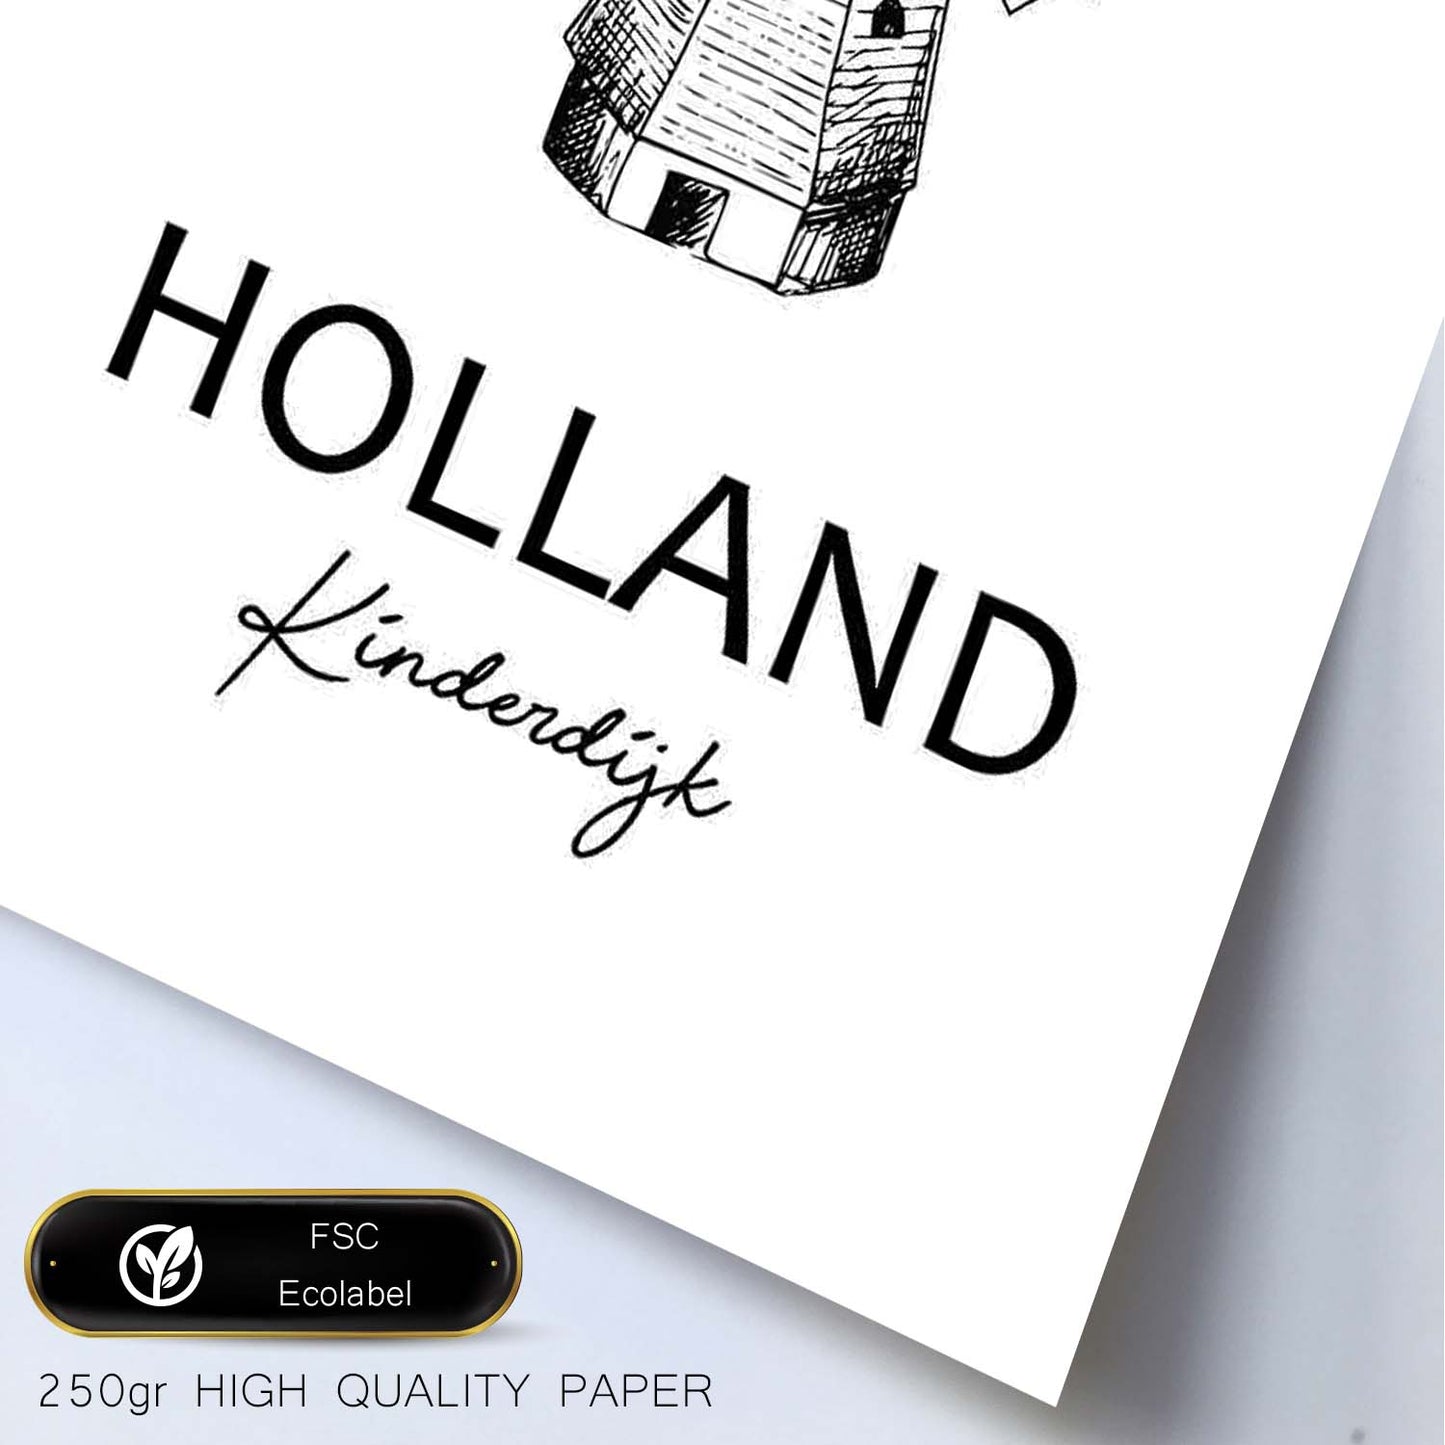 Poster de Holanda - Kinderdijk. Láminas con monumentos de ciudades.-Artwork-Nacnic-Nacnic Estudio SL